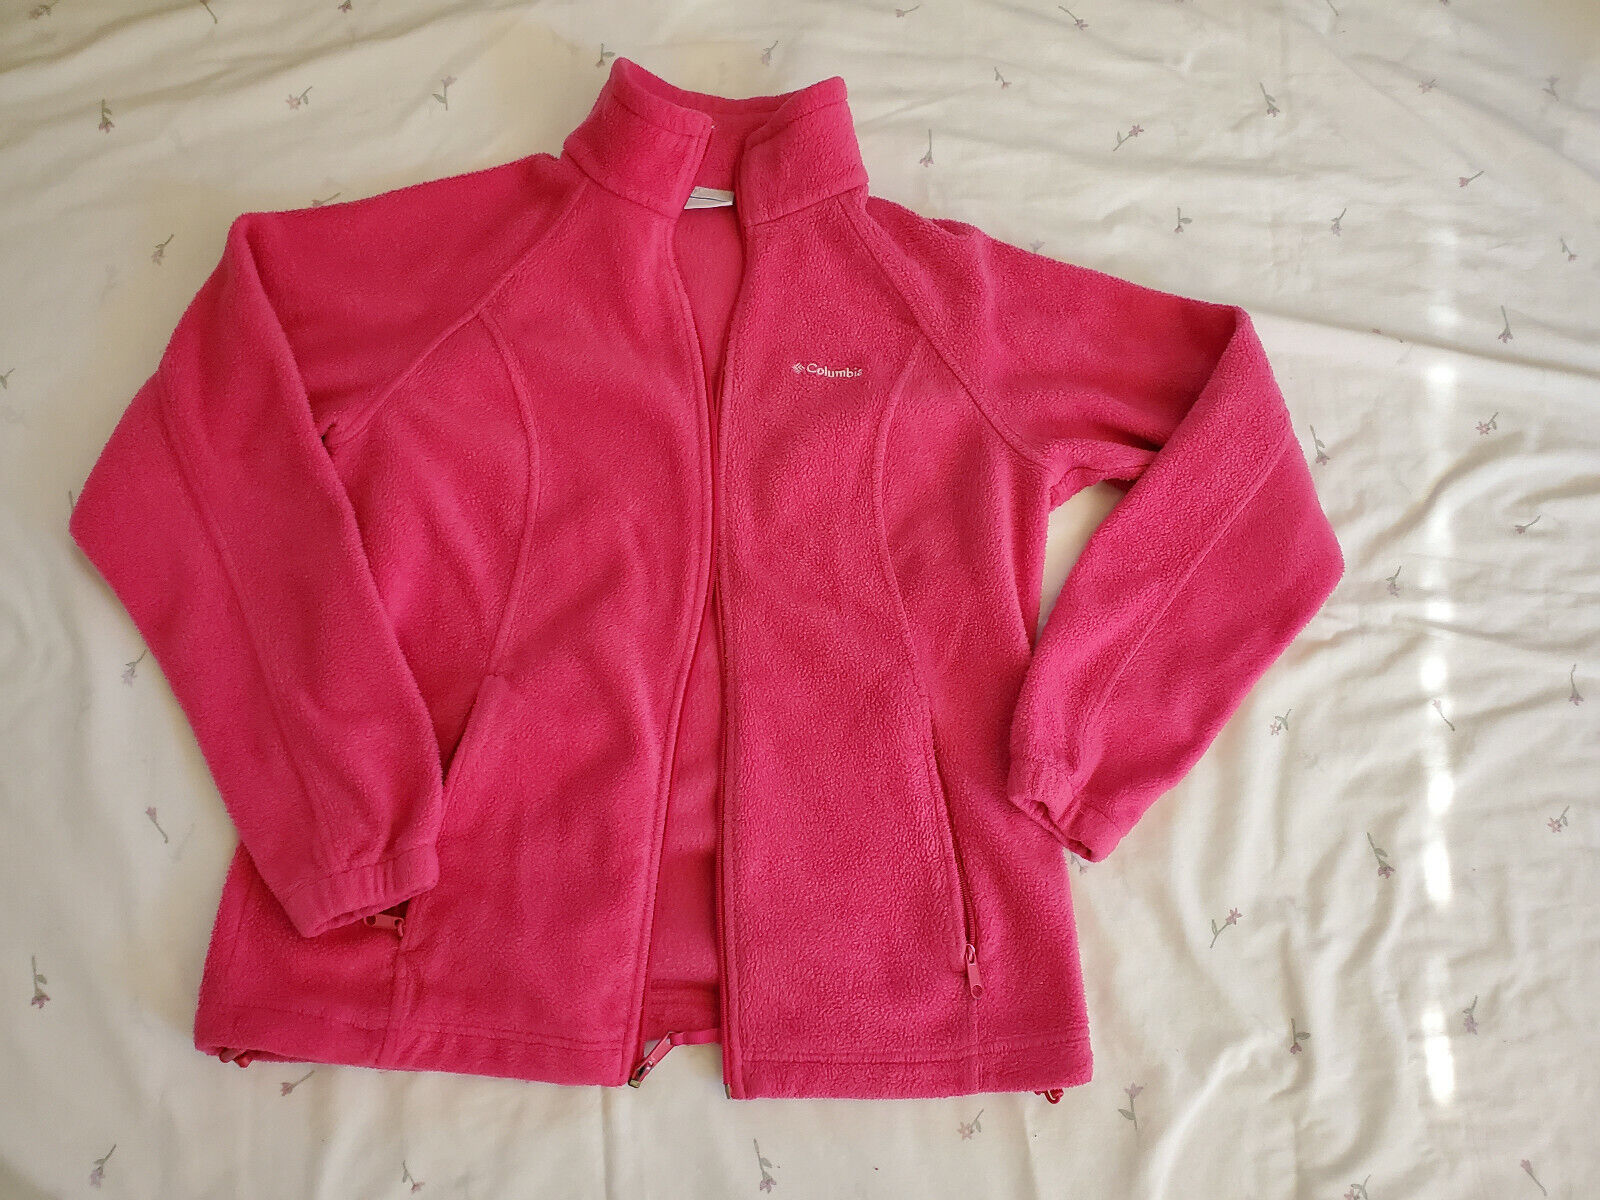 Ladies Thermal Top, Long Sweatshirt, Fleece Jacket Three Pieces All Sz Large Tek Gear, Sonoma, Columbia - фотография #7